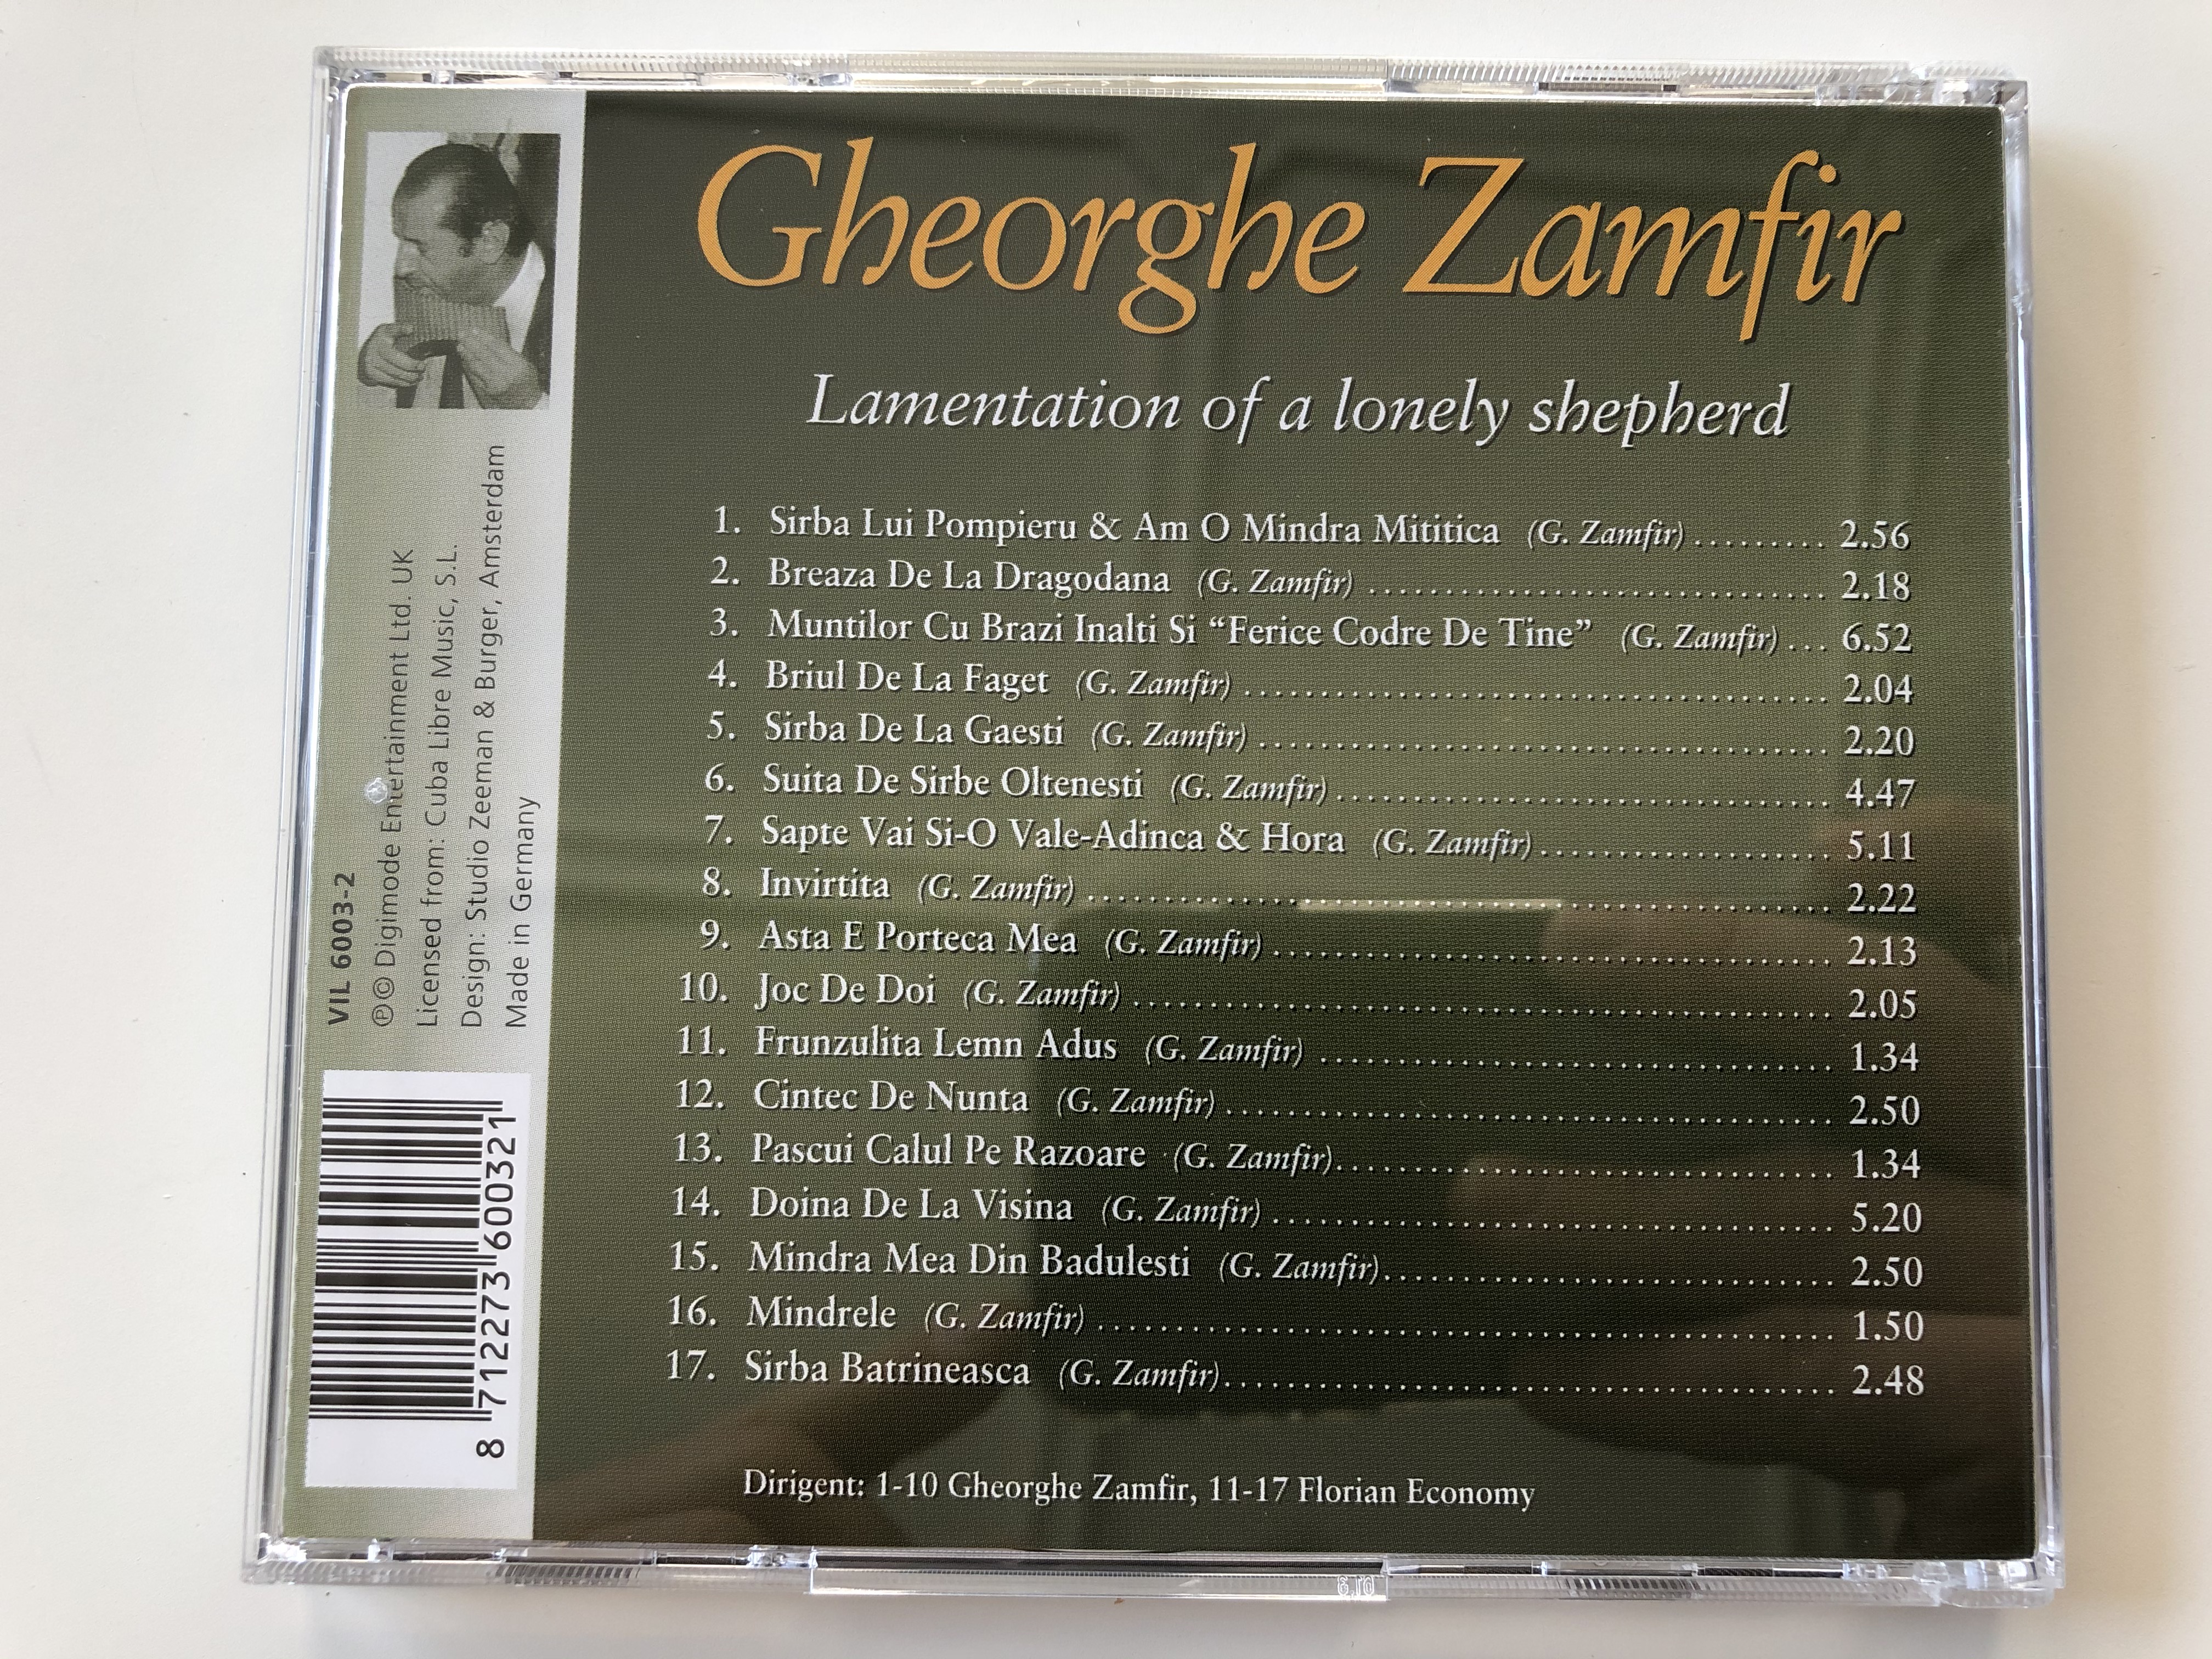 gheorghe-zamfir-lamentation-of-a-lonely-shepherd-digimode-emertainment-ltd.-audio-cd-vil-6003-2-3-.jpg